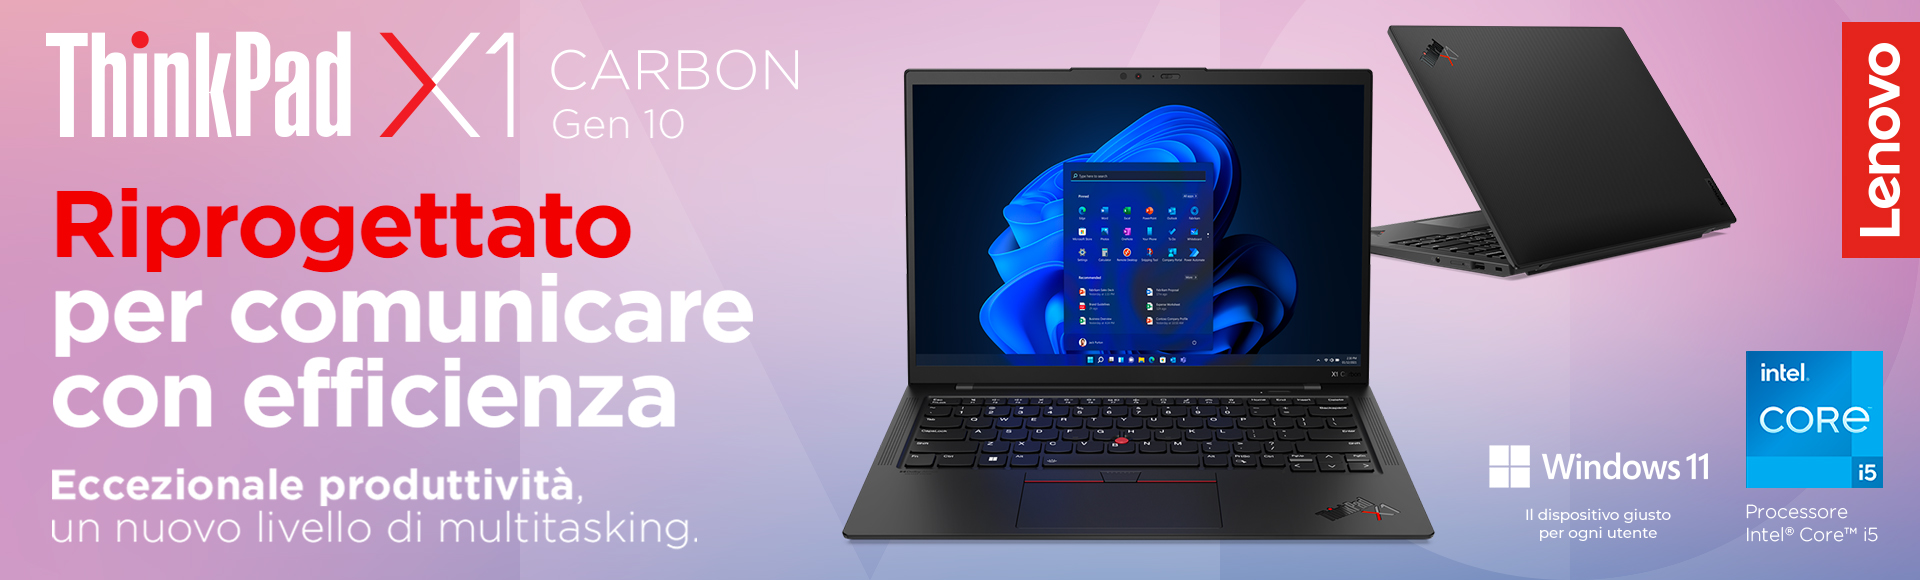 Lenovo Thinkpad X1 Carbon 10gen